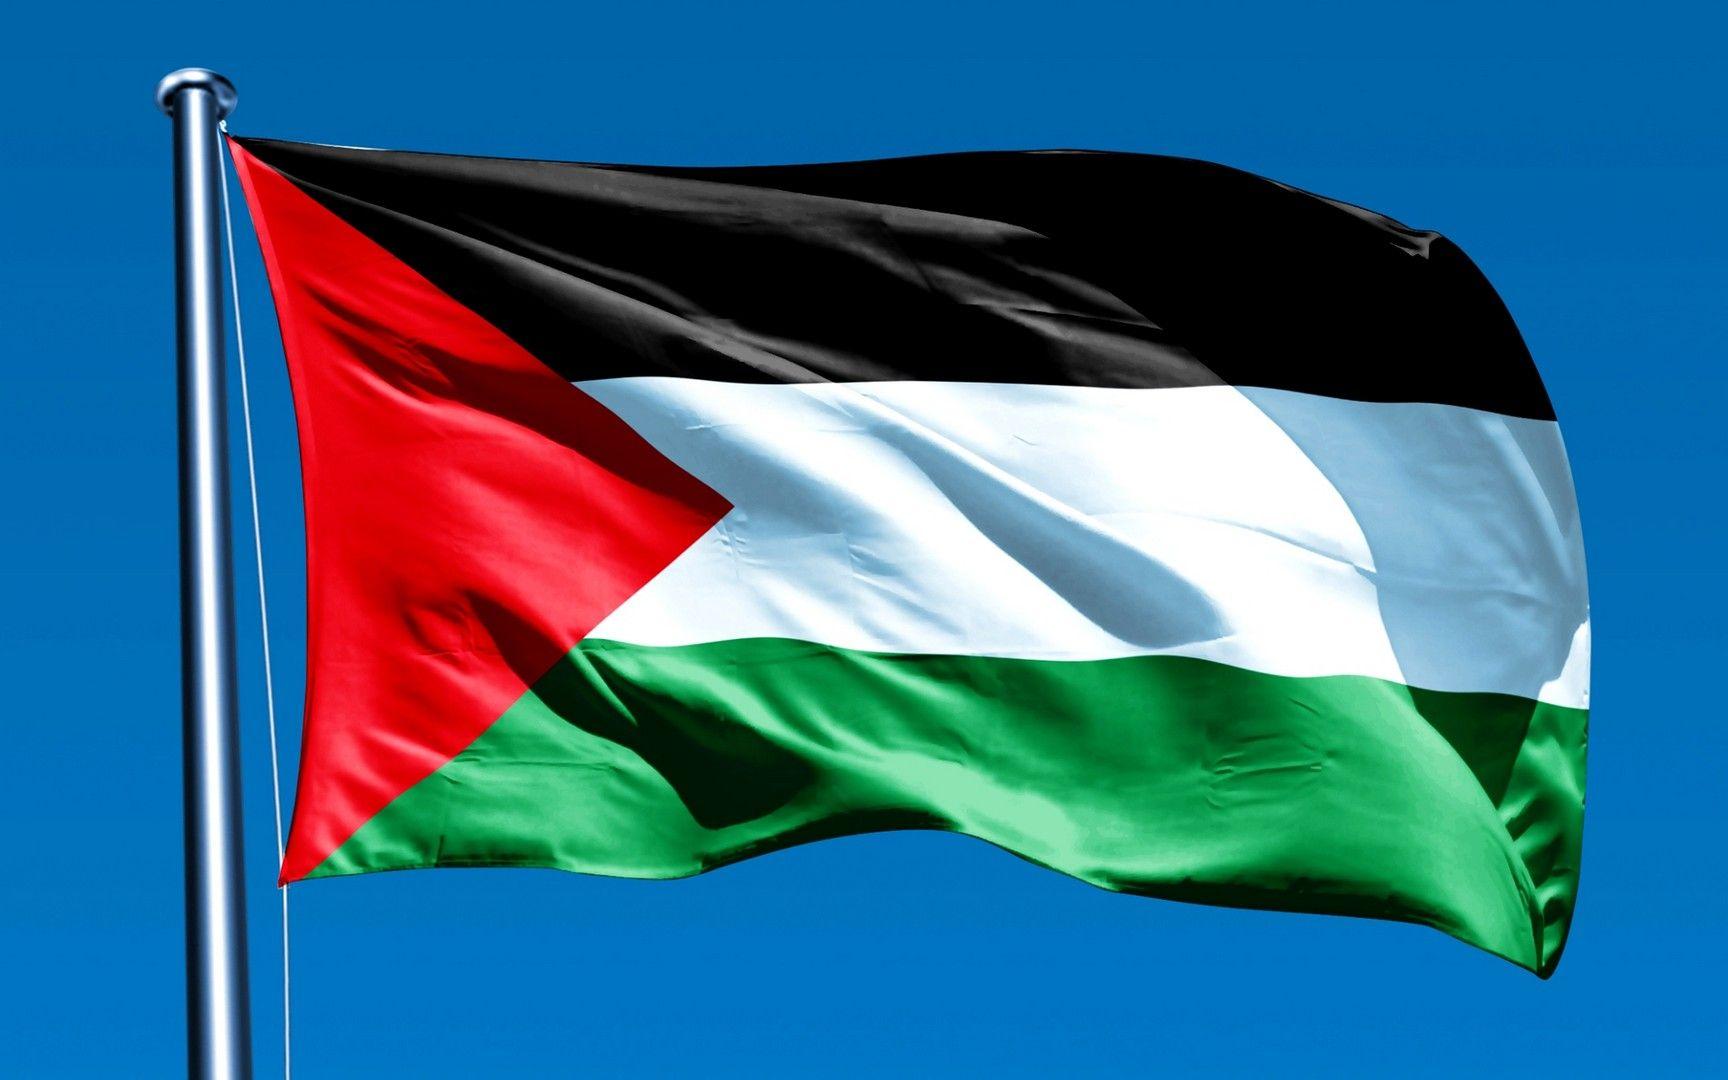 Palestine Flag wallpaper. Flags wallpaper. Palestine